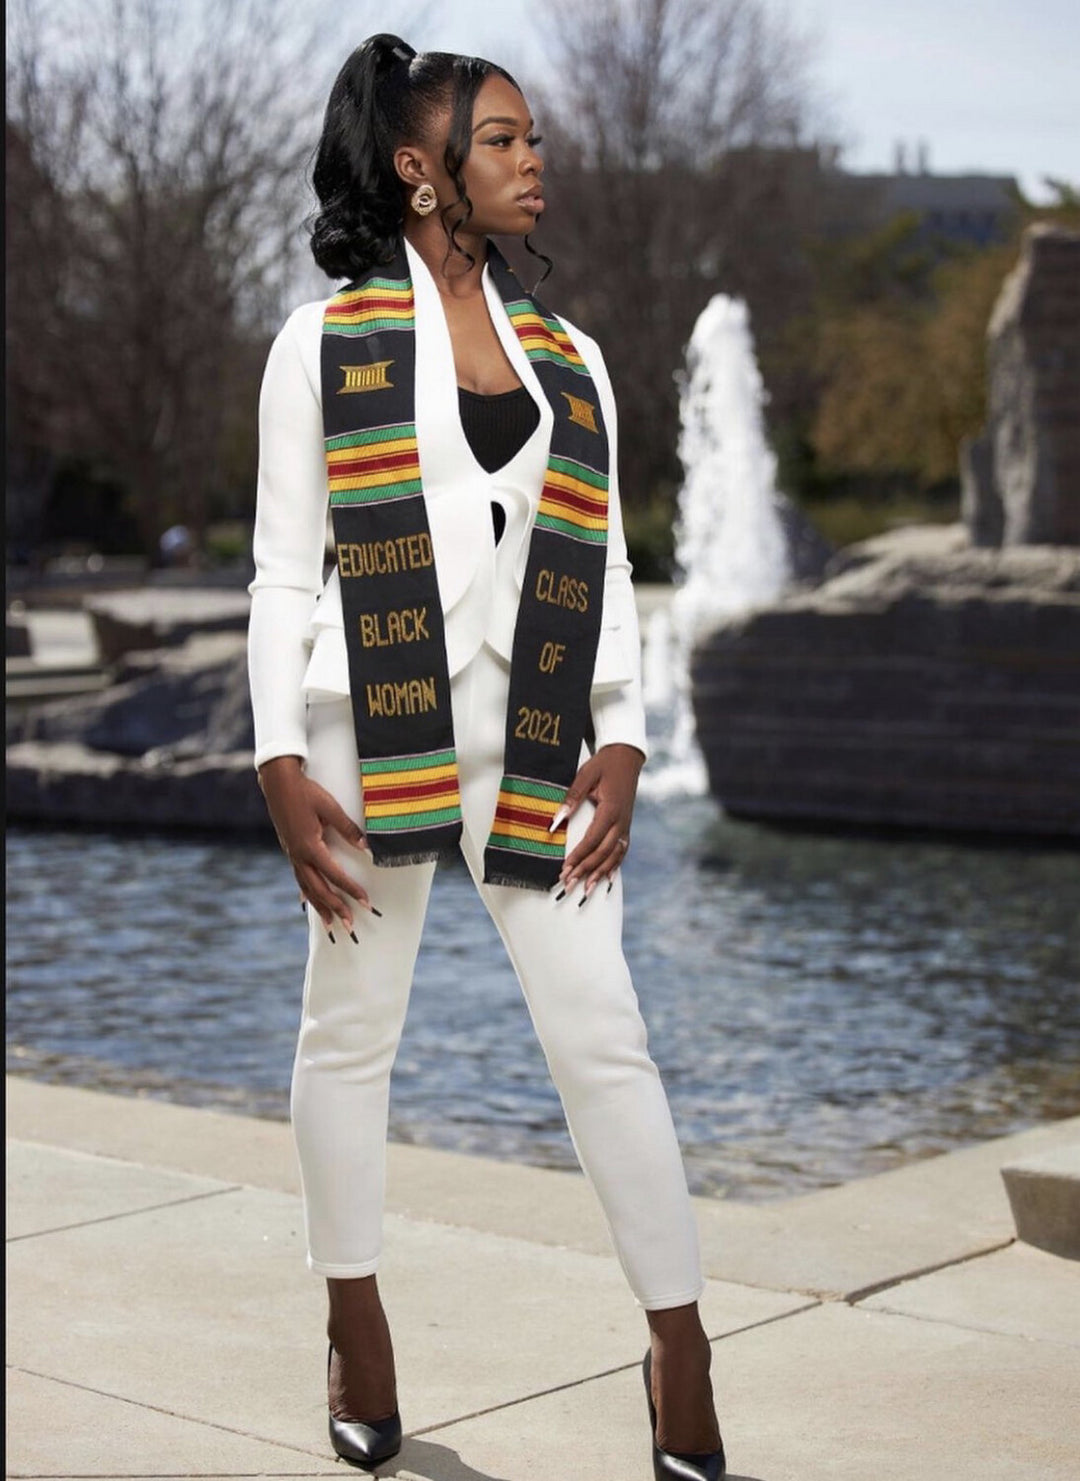 Educated Black Woman Kente Cloth Graduation Stole w/ Garment Care Bag